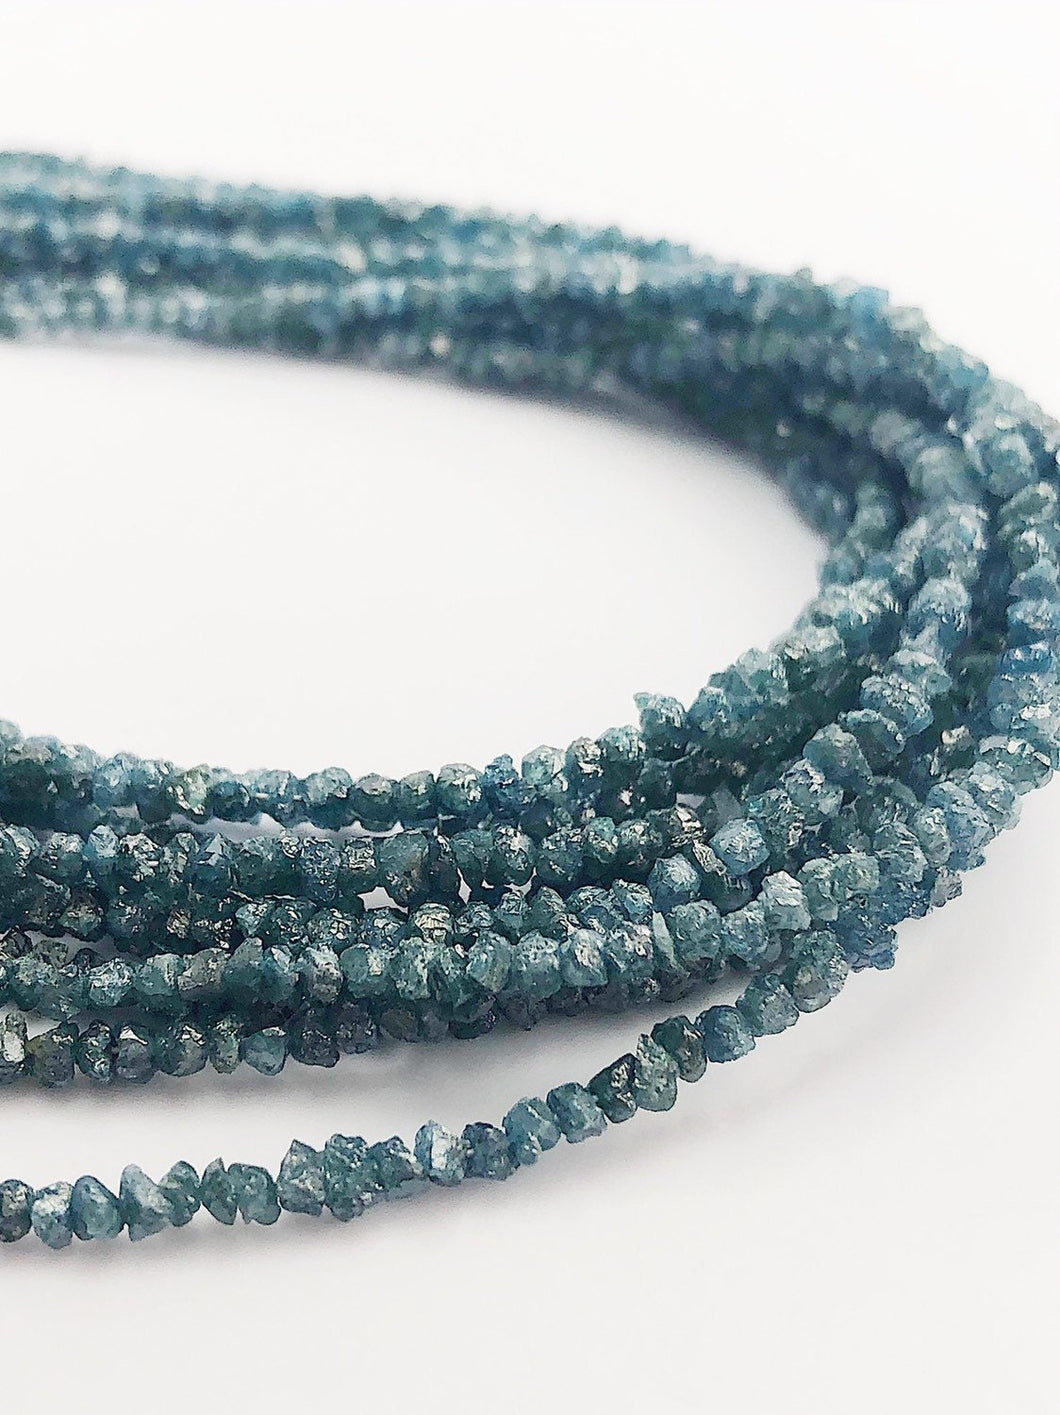 HALF OFF SALE - Blue Diamond Gemstone Beads, Full Strand, 14